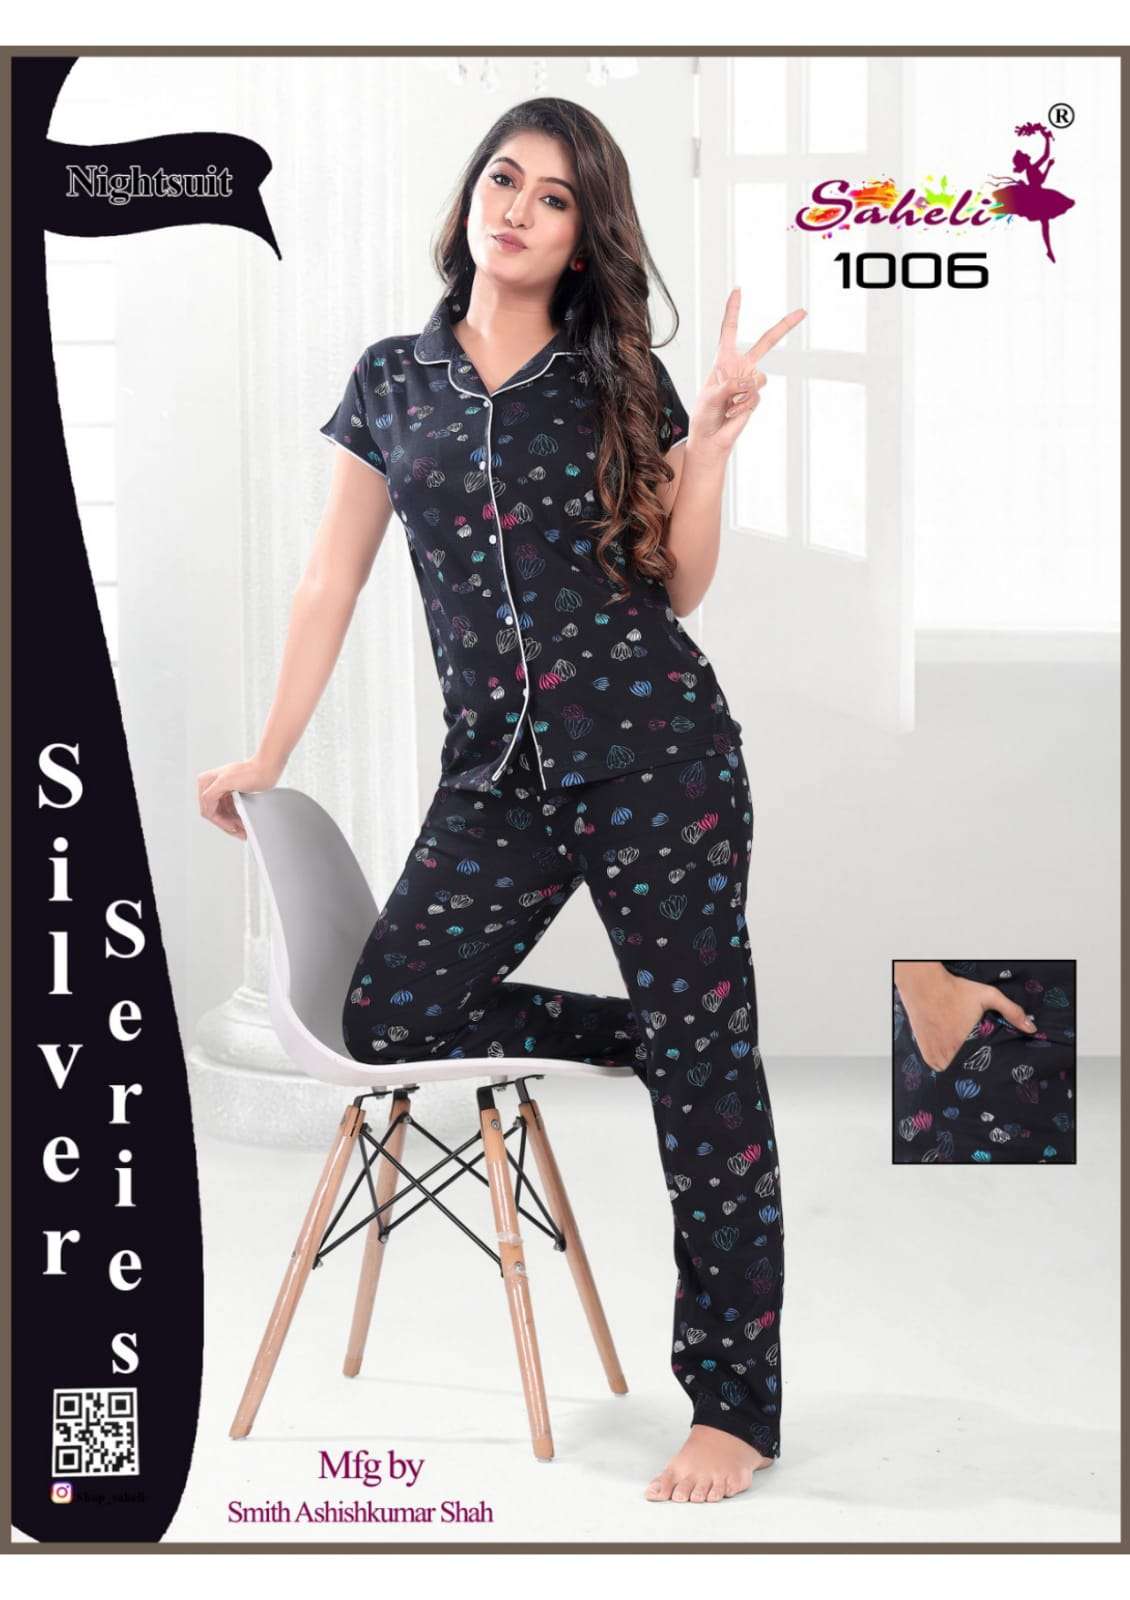 saheli 1006 colour series latest trendy casual wear night suit wholesaler surat gujarat